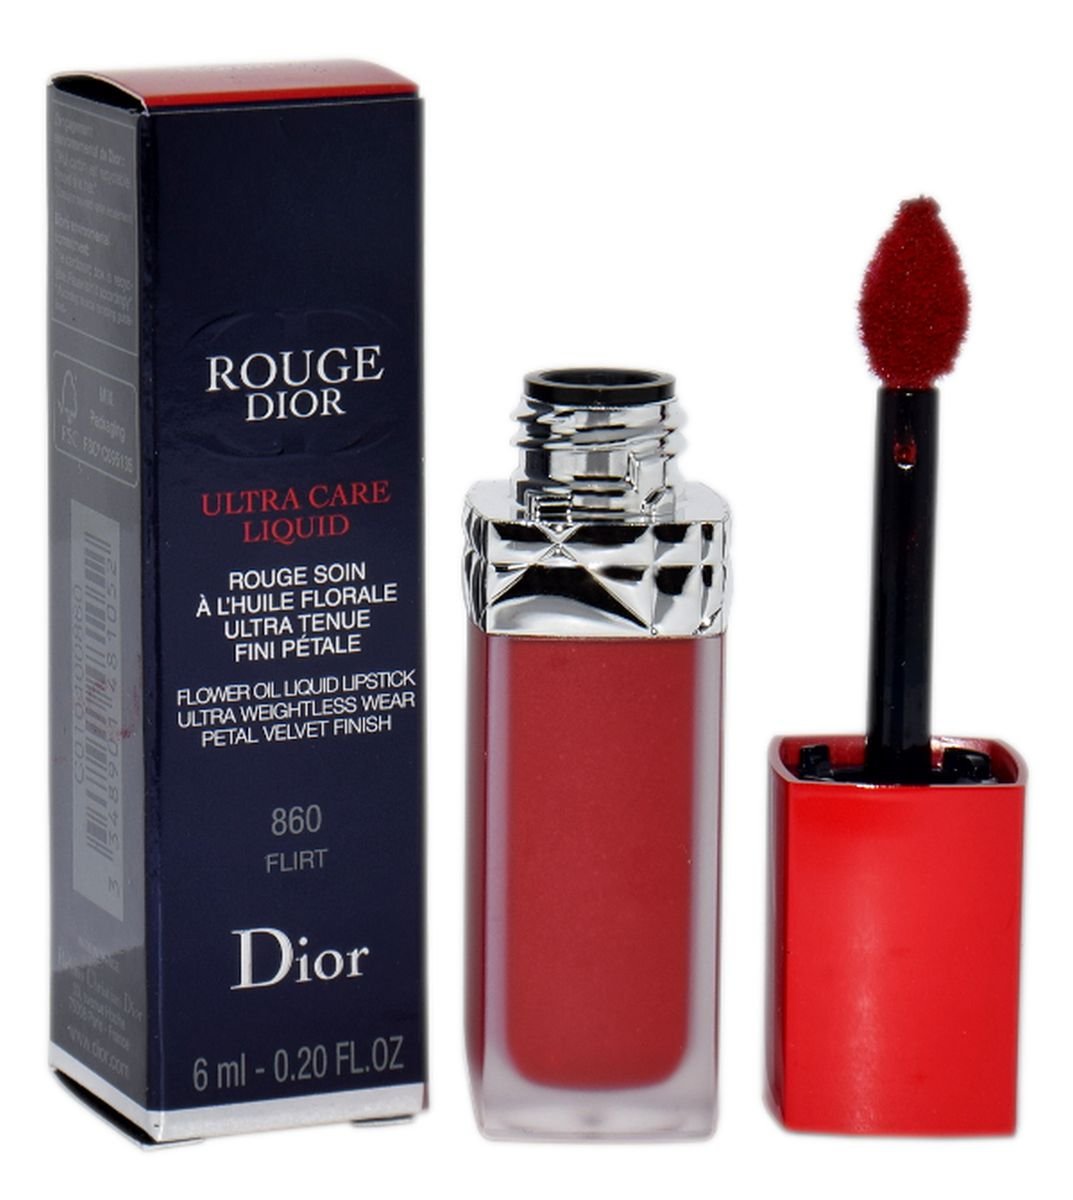 Dior 860 Flirt Nude Rouge Ultra Care Liquid Pomadka 6ml